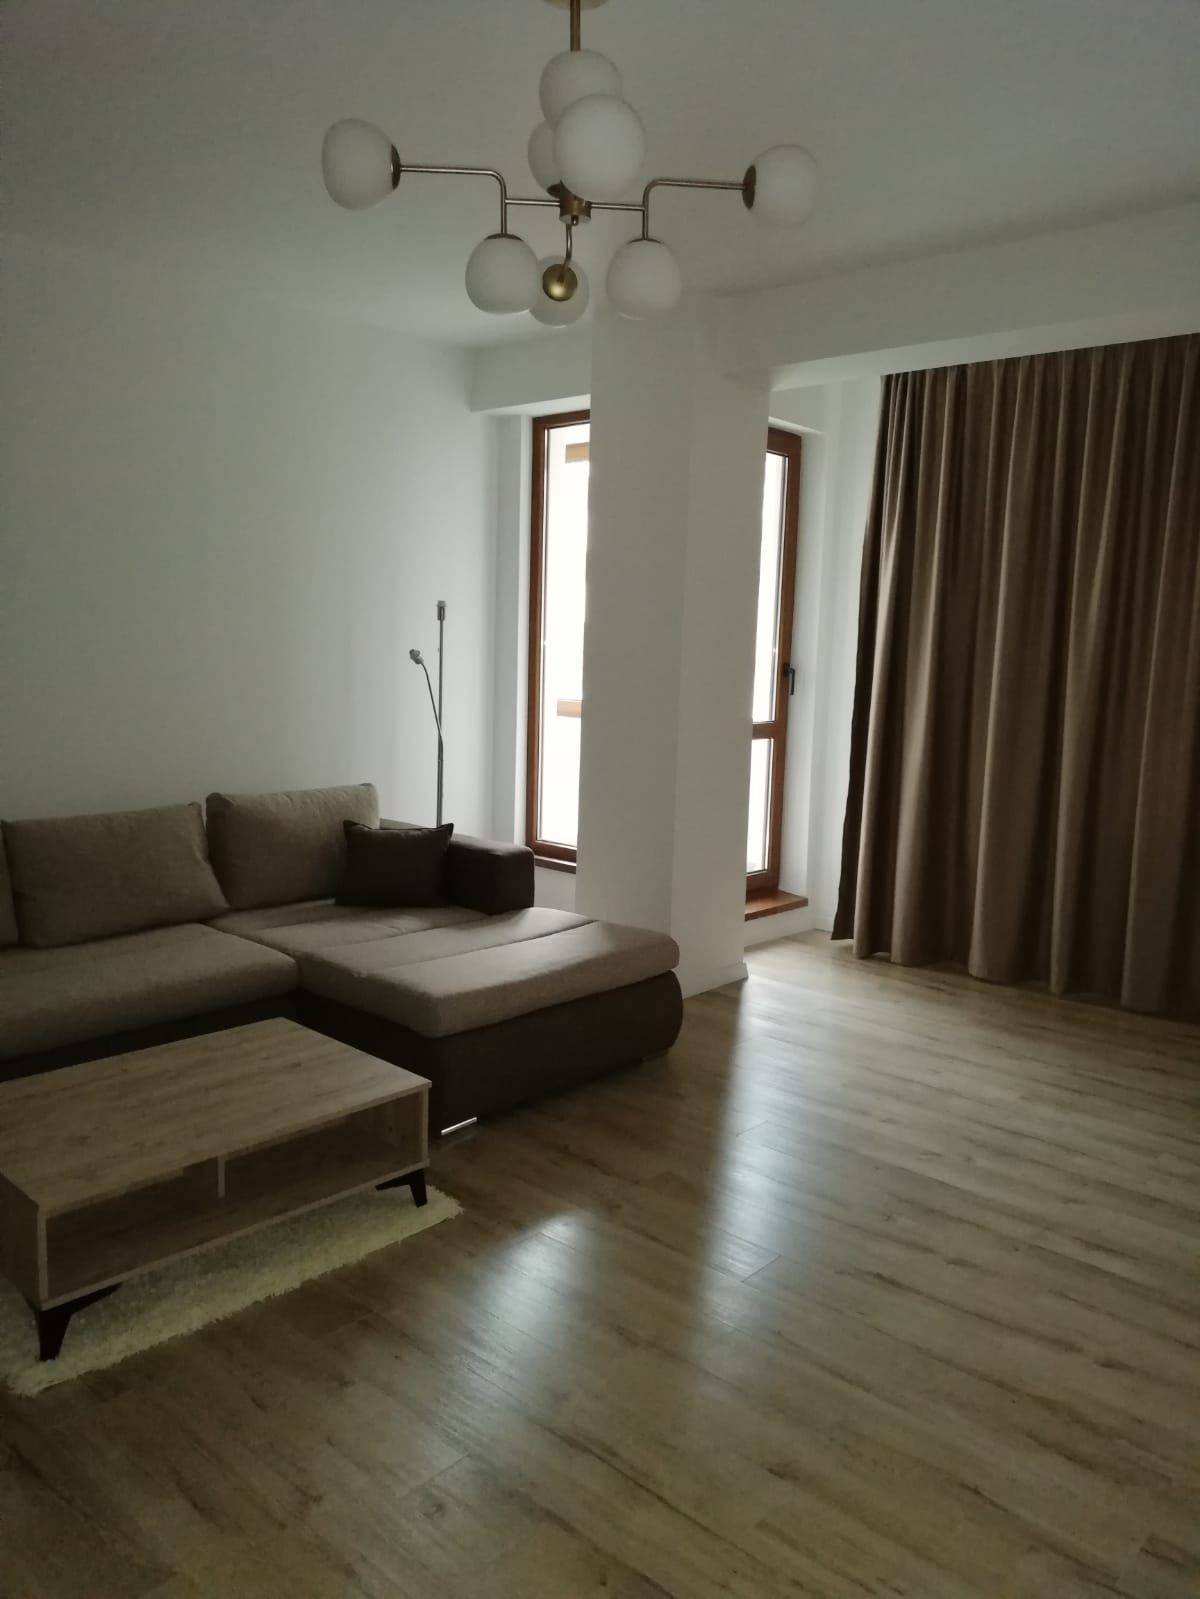 Apartament de vanzare in bloc nou pe Titulescu cu parcare subterana